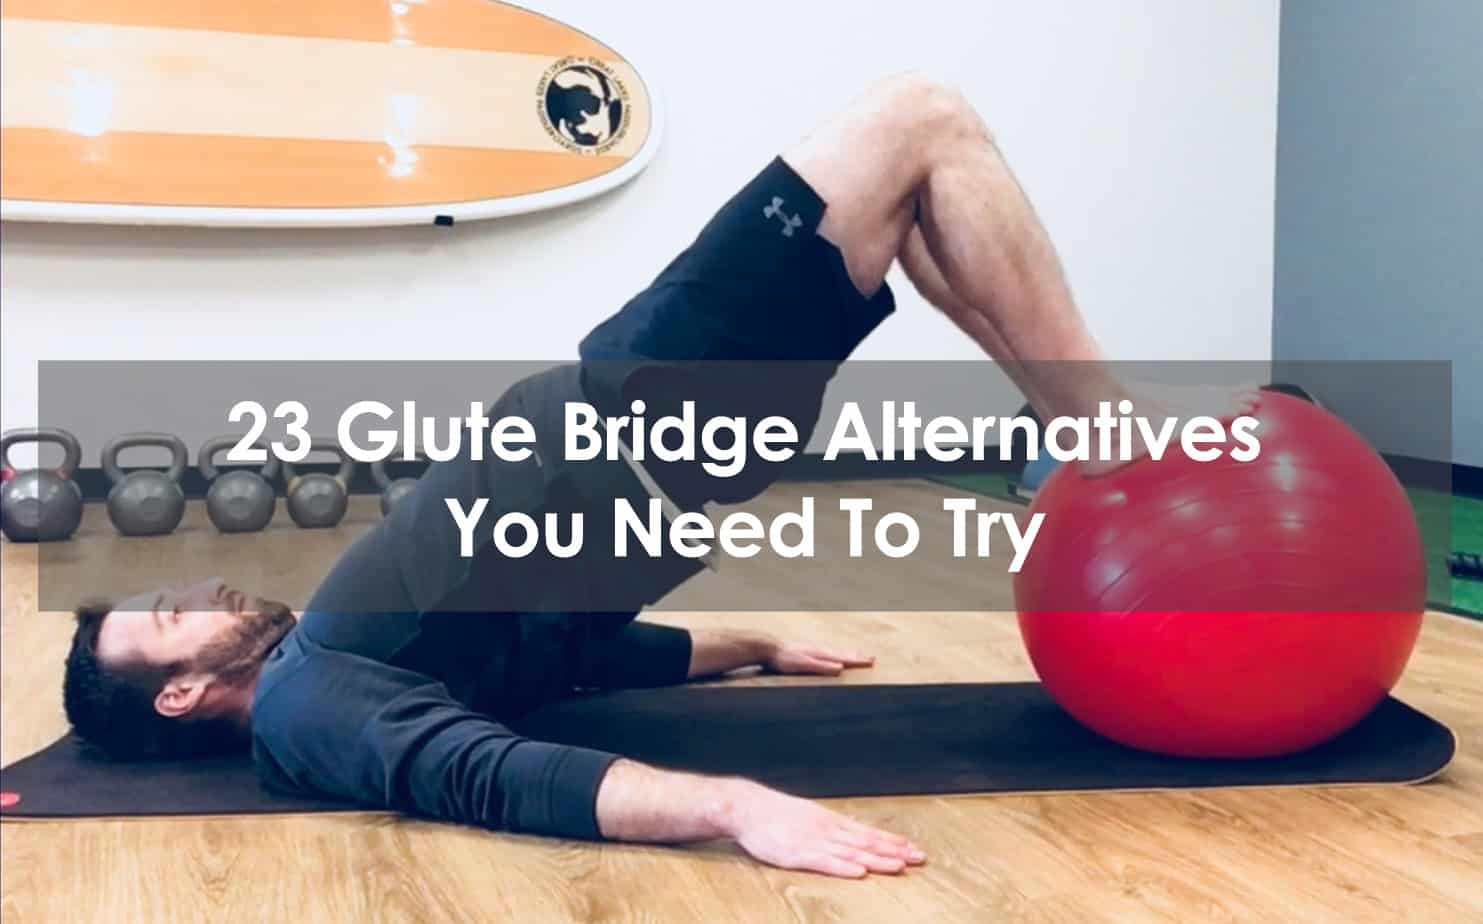 Glute Bridge With Ball